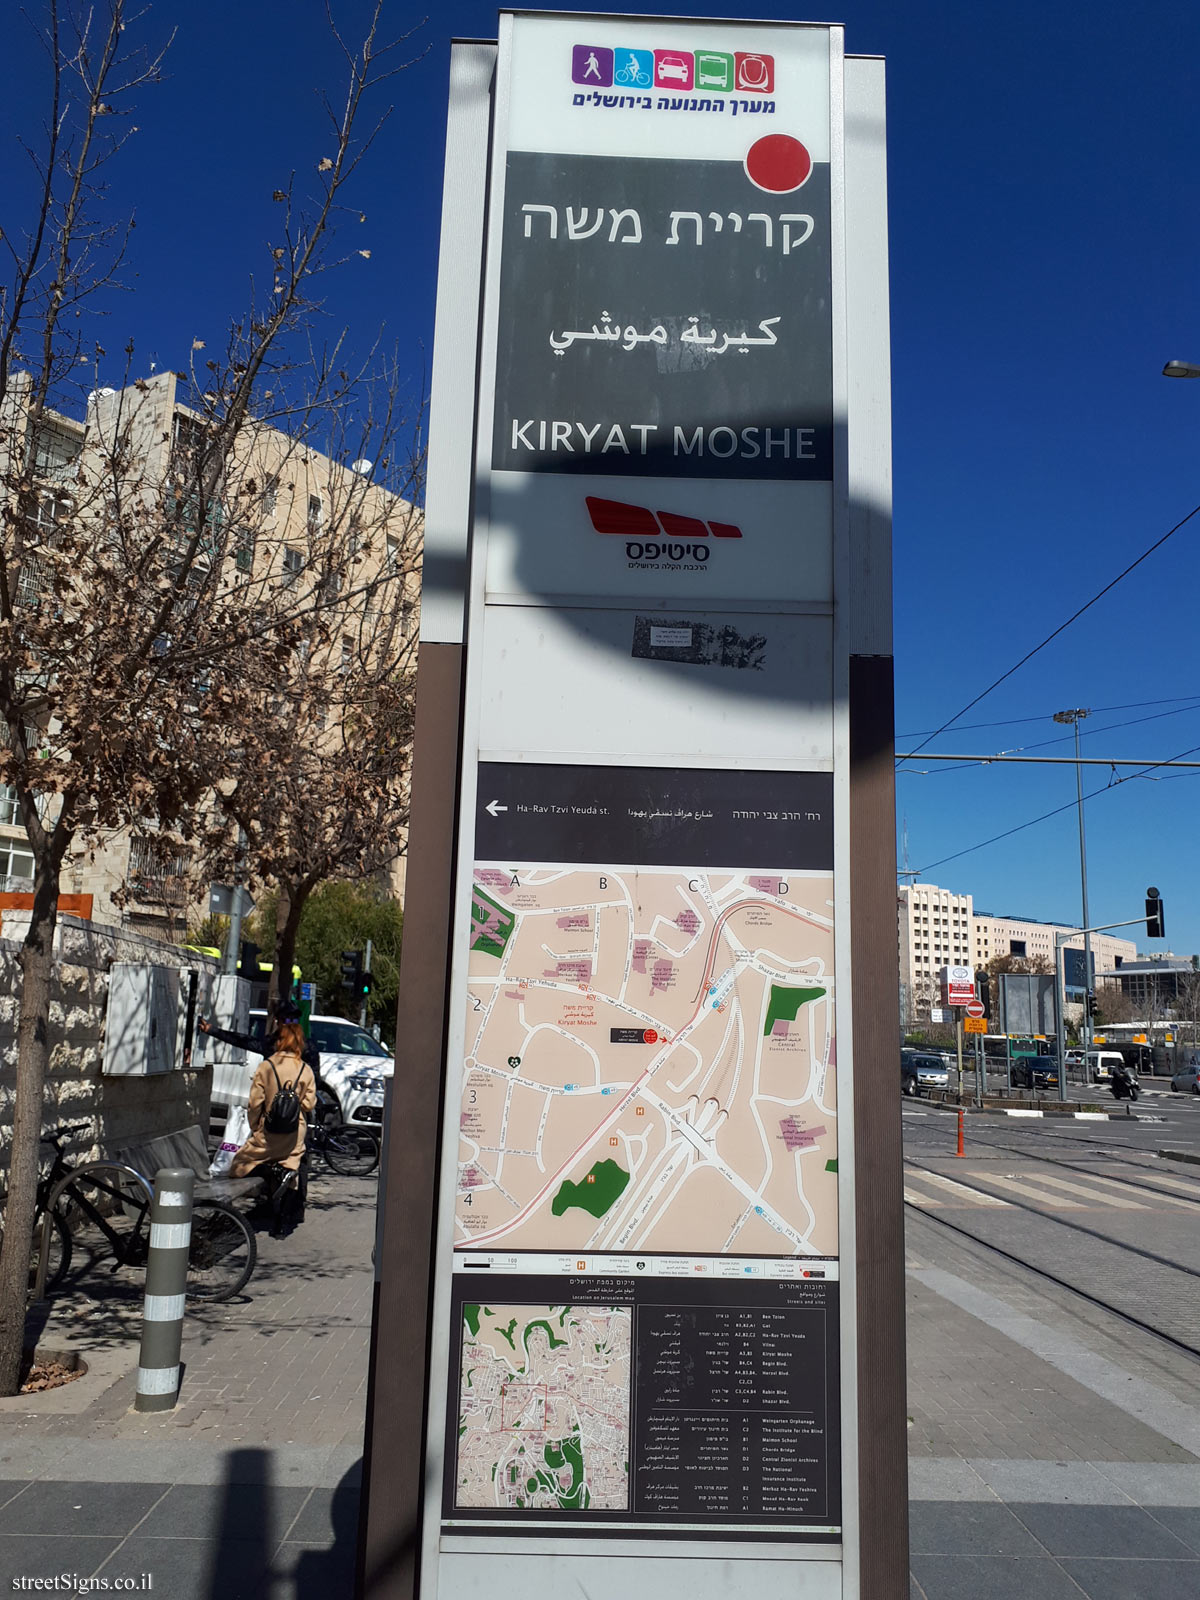 Jerusalem - Light Rail - Kiryat Moshe Station (2) (The other side of the sign)